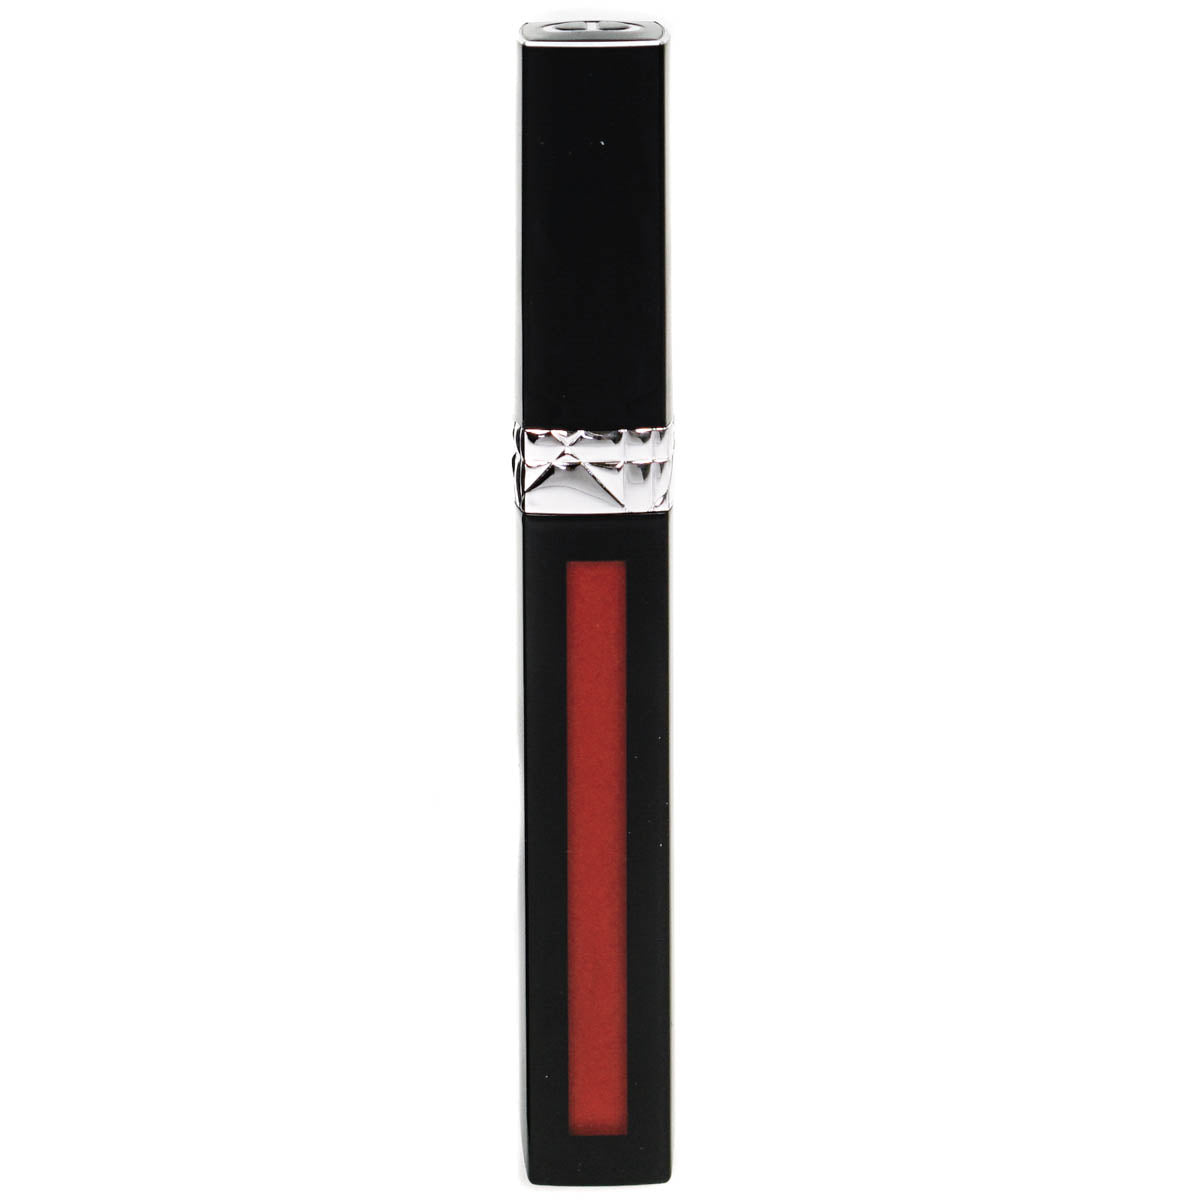 Dior Rouge Metal Liquid Lipstick 751 Rock'n'Metal